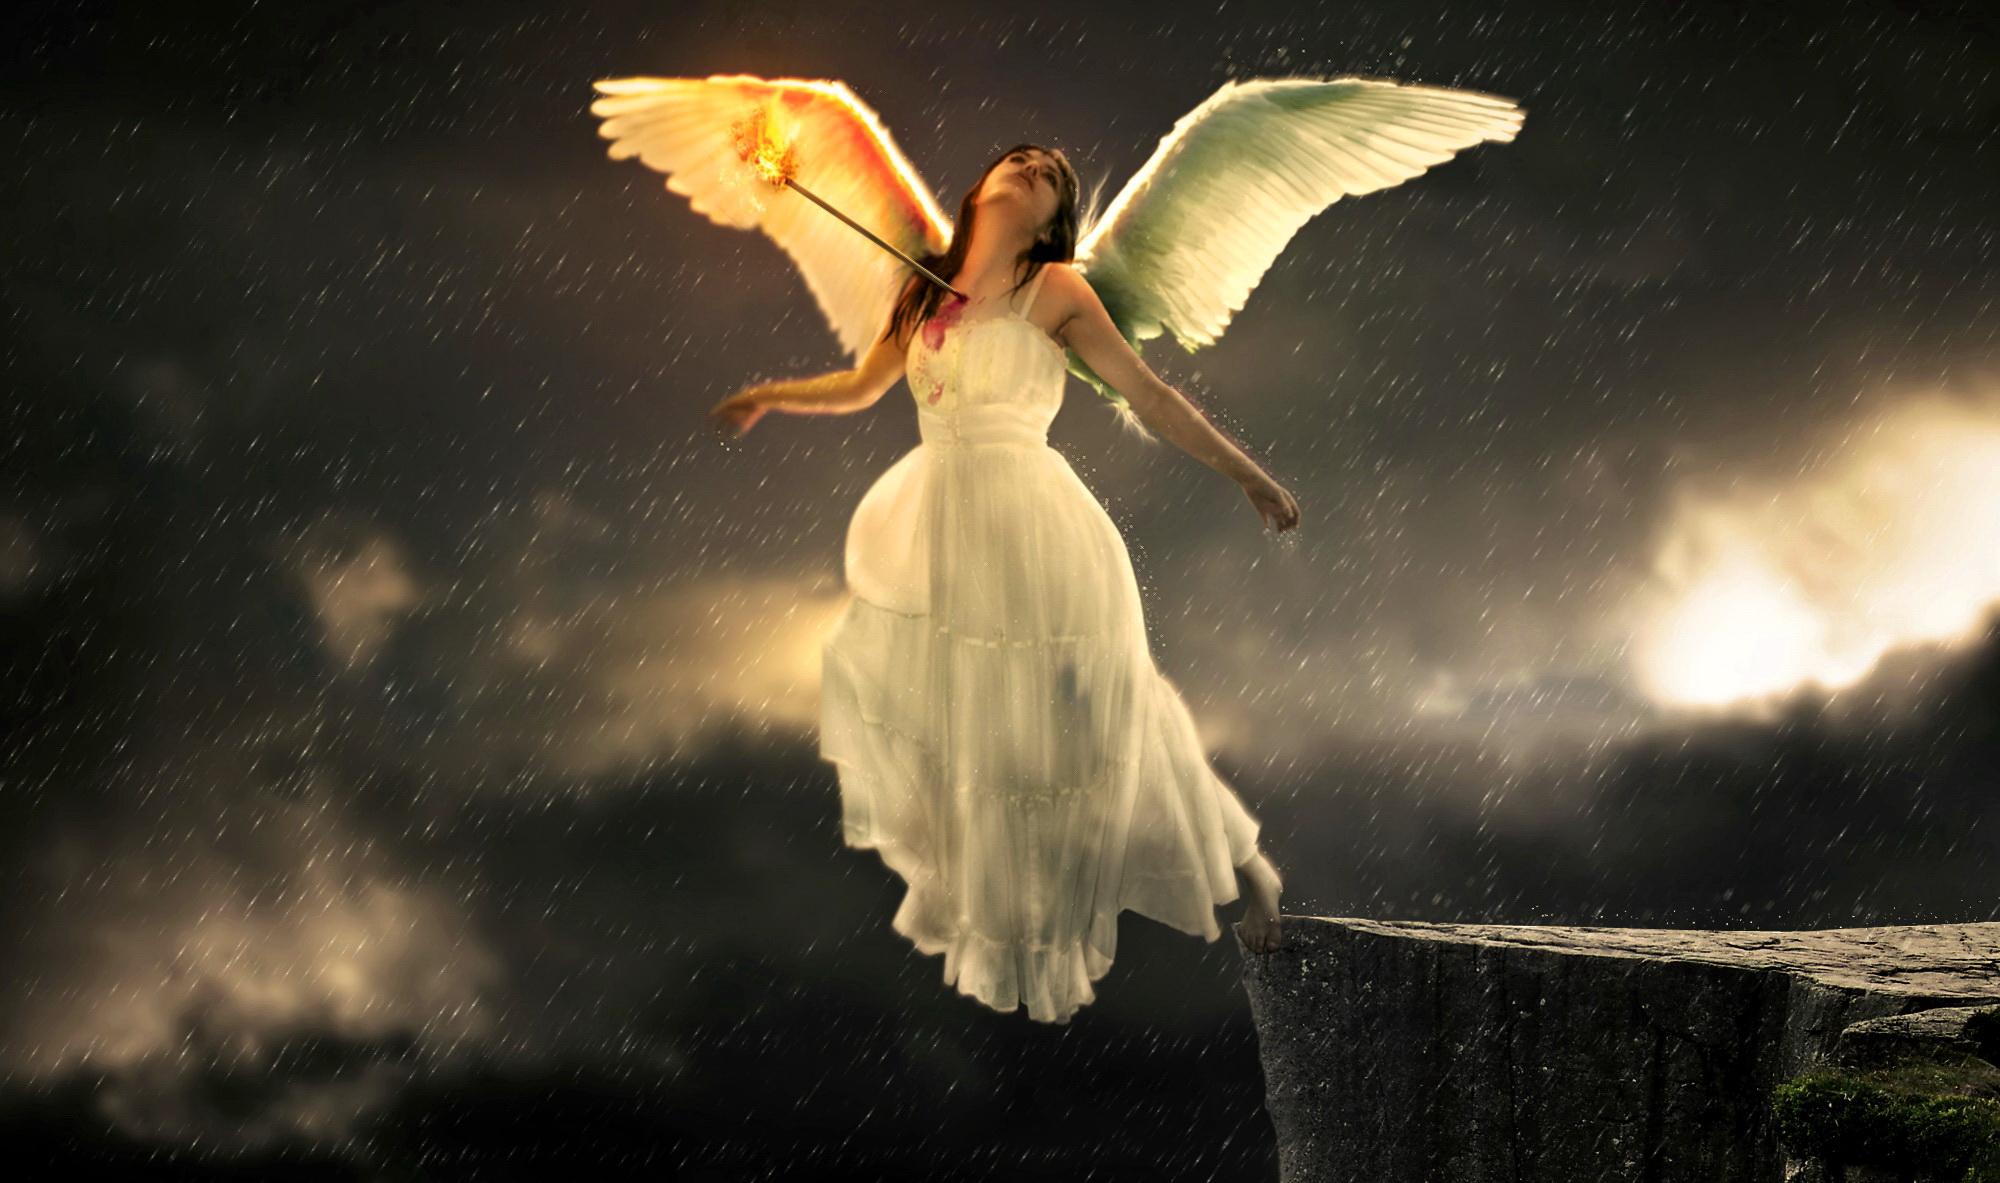 Click HD Sad Angel Wallpaper Image And Save As